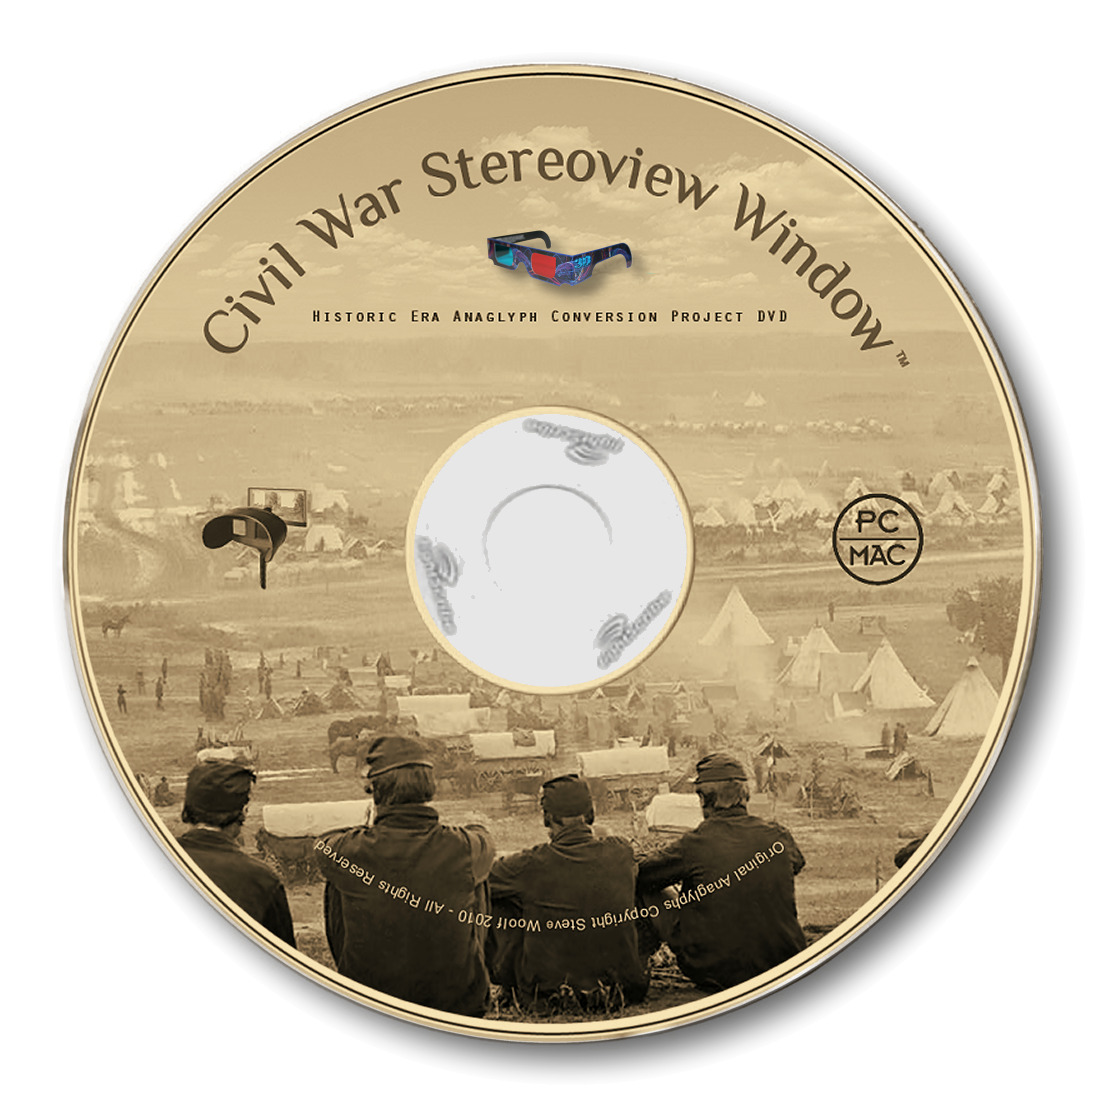 CIVIL WAR STEREOVIEW 3D ANAGLYPH CONVERSION DVD